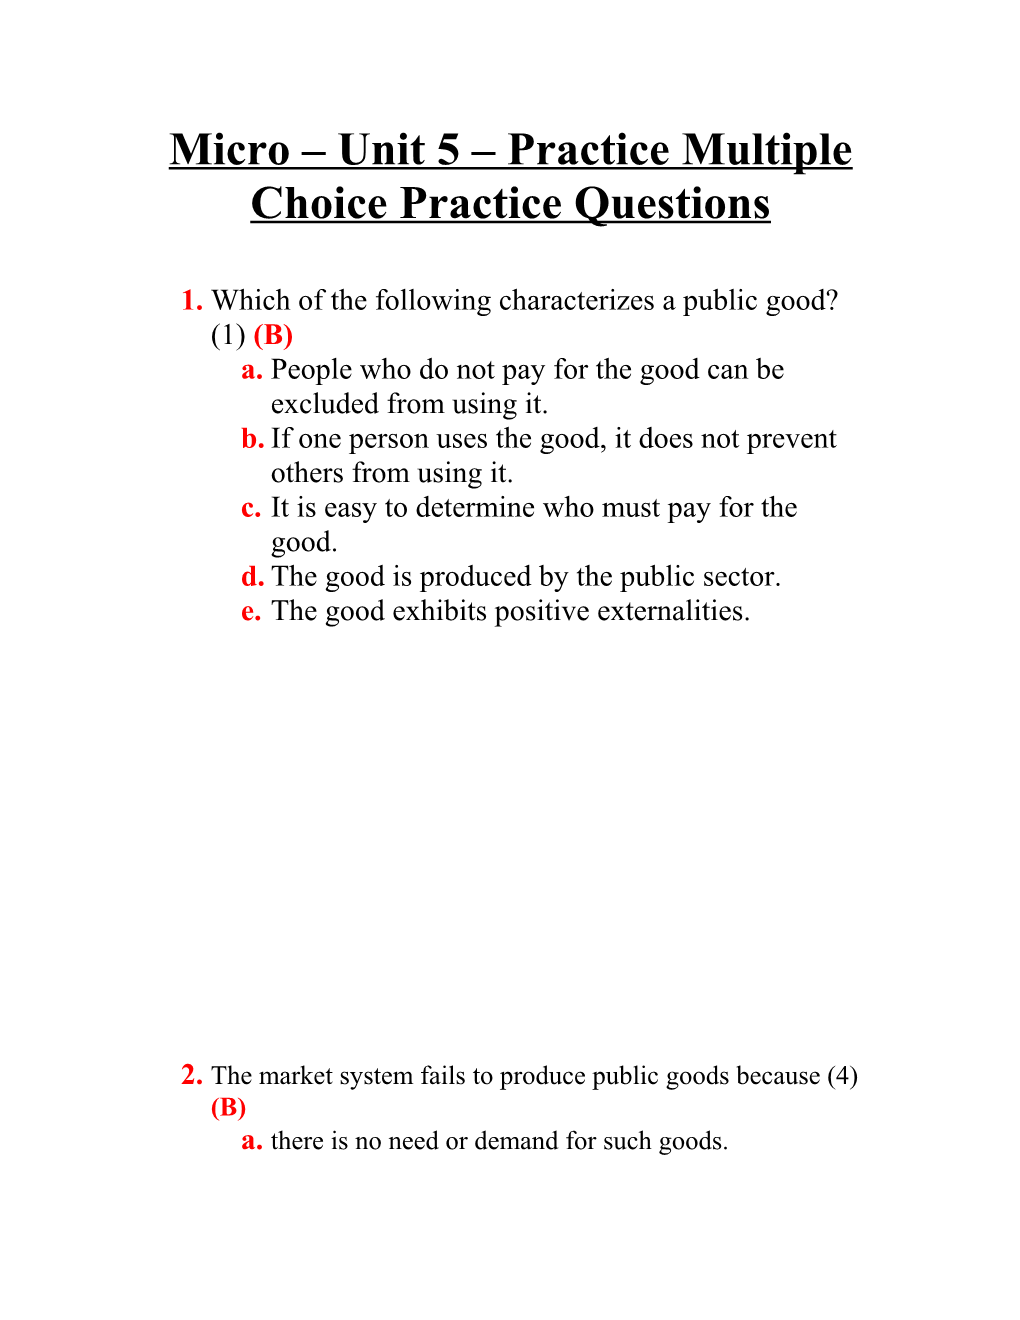 Micro Unit 5 Practice Multiple Choice Practice Questions